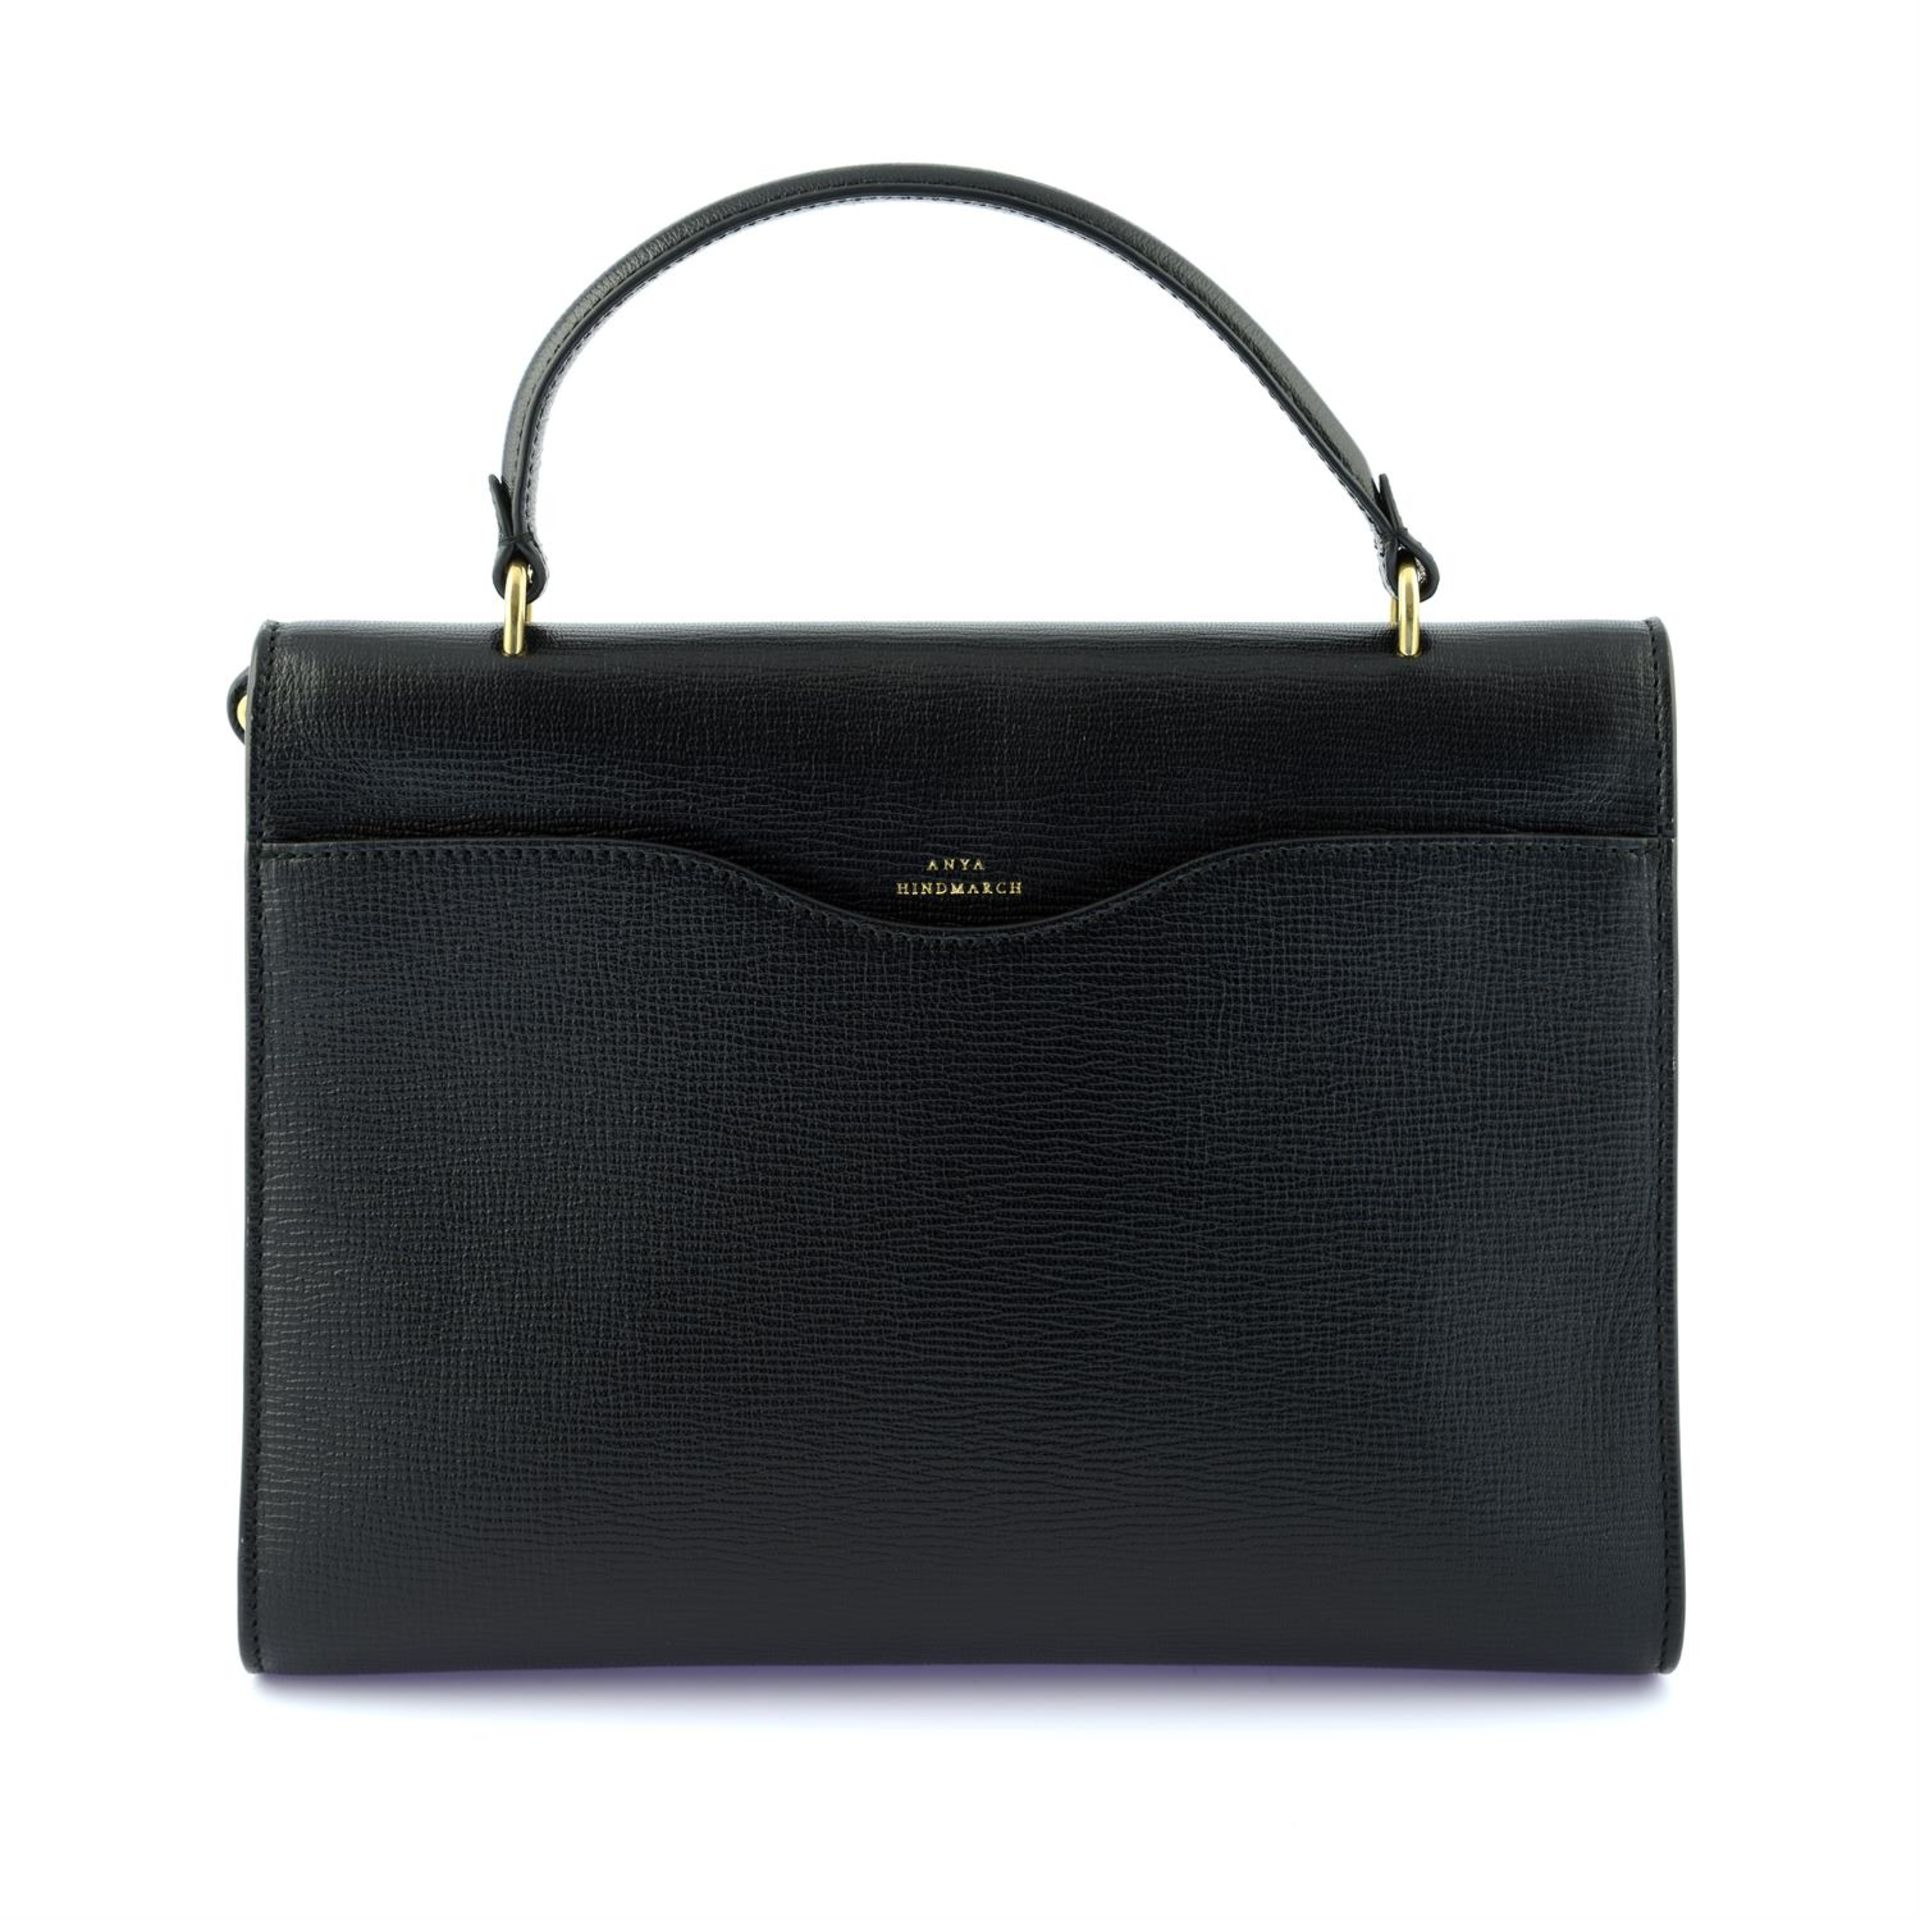 ANYA HINDMARCH - a black leather handbag. - Bild 2 aus 5